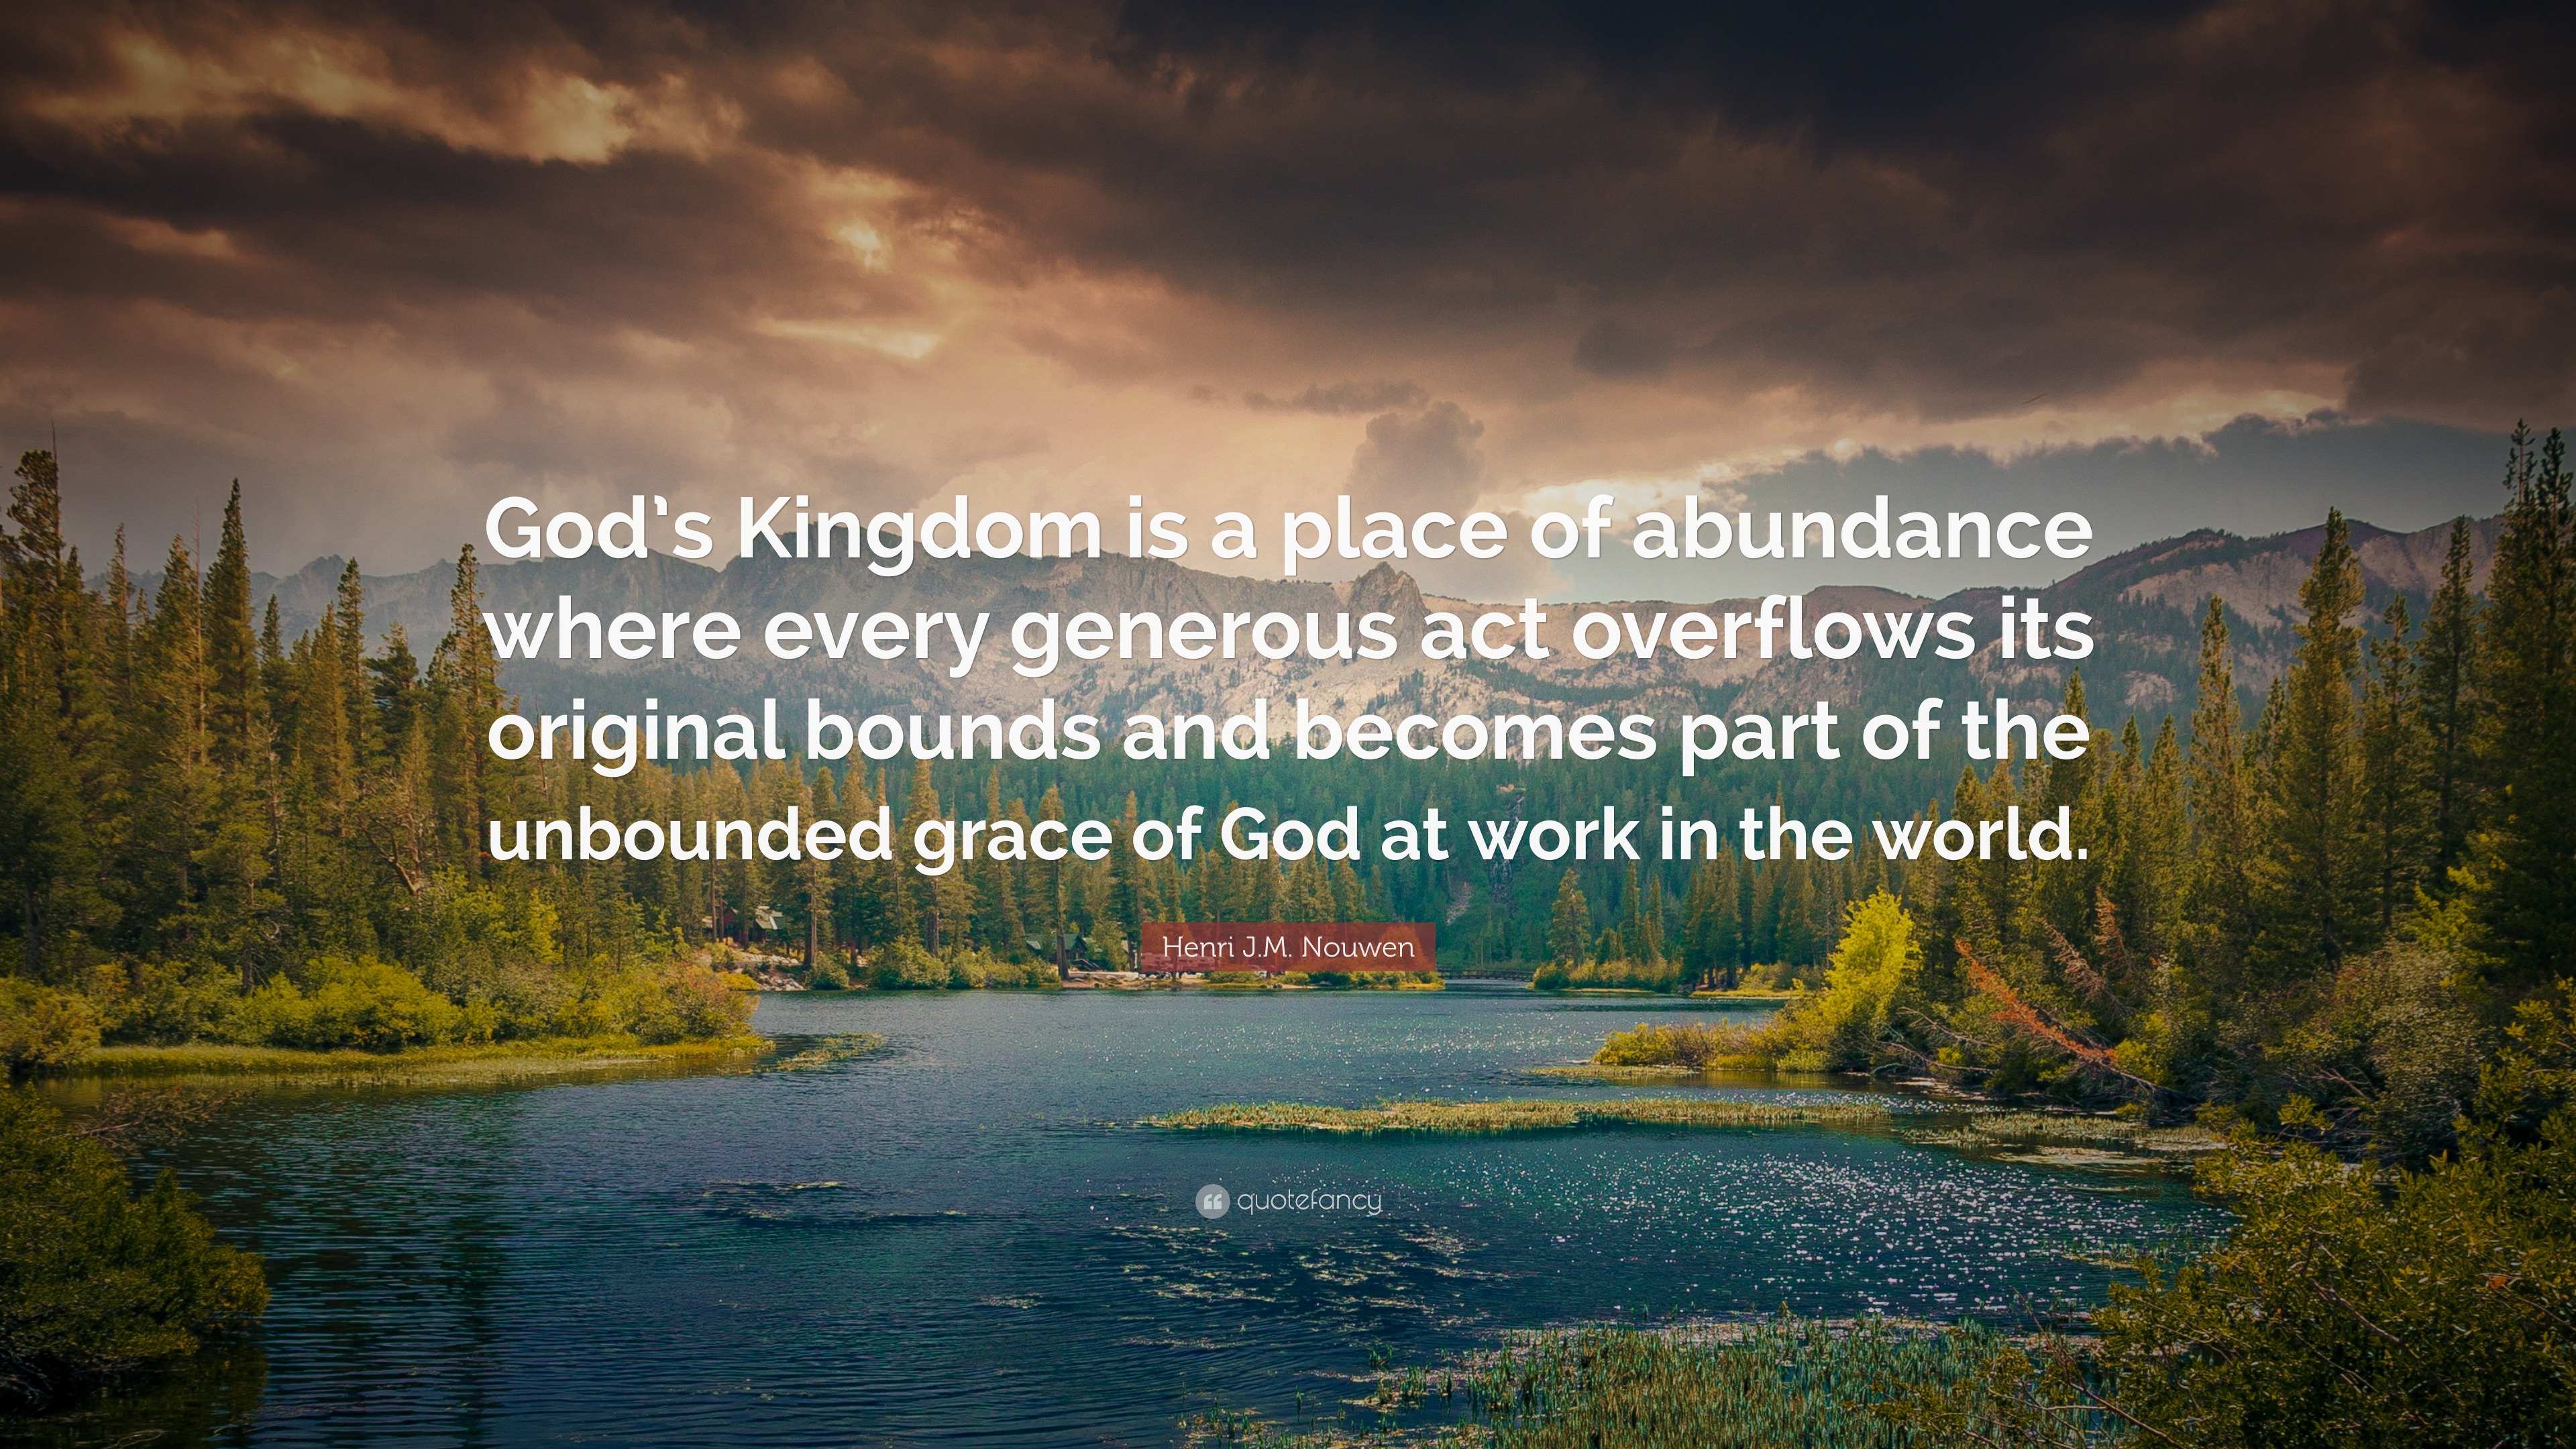 Henri J.M. Nouwen Quote: “God’s Kingdom is a place of abundance where